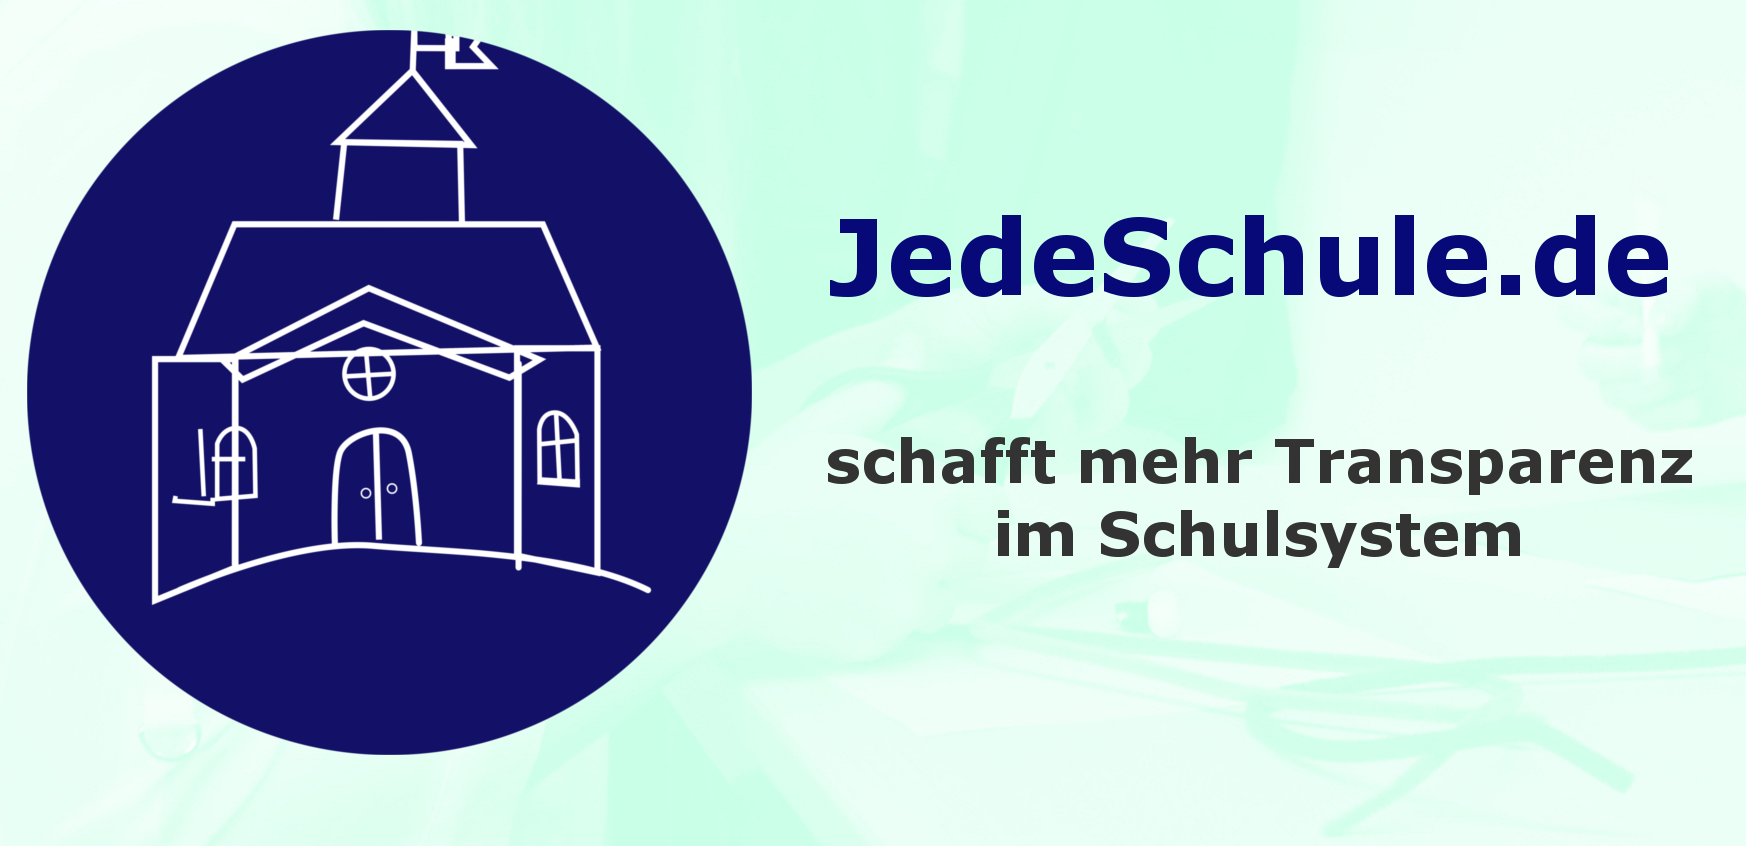 (c) Jedeschule.de